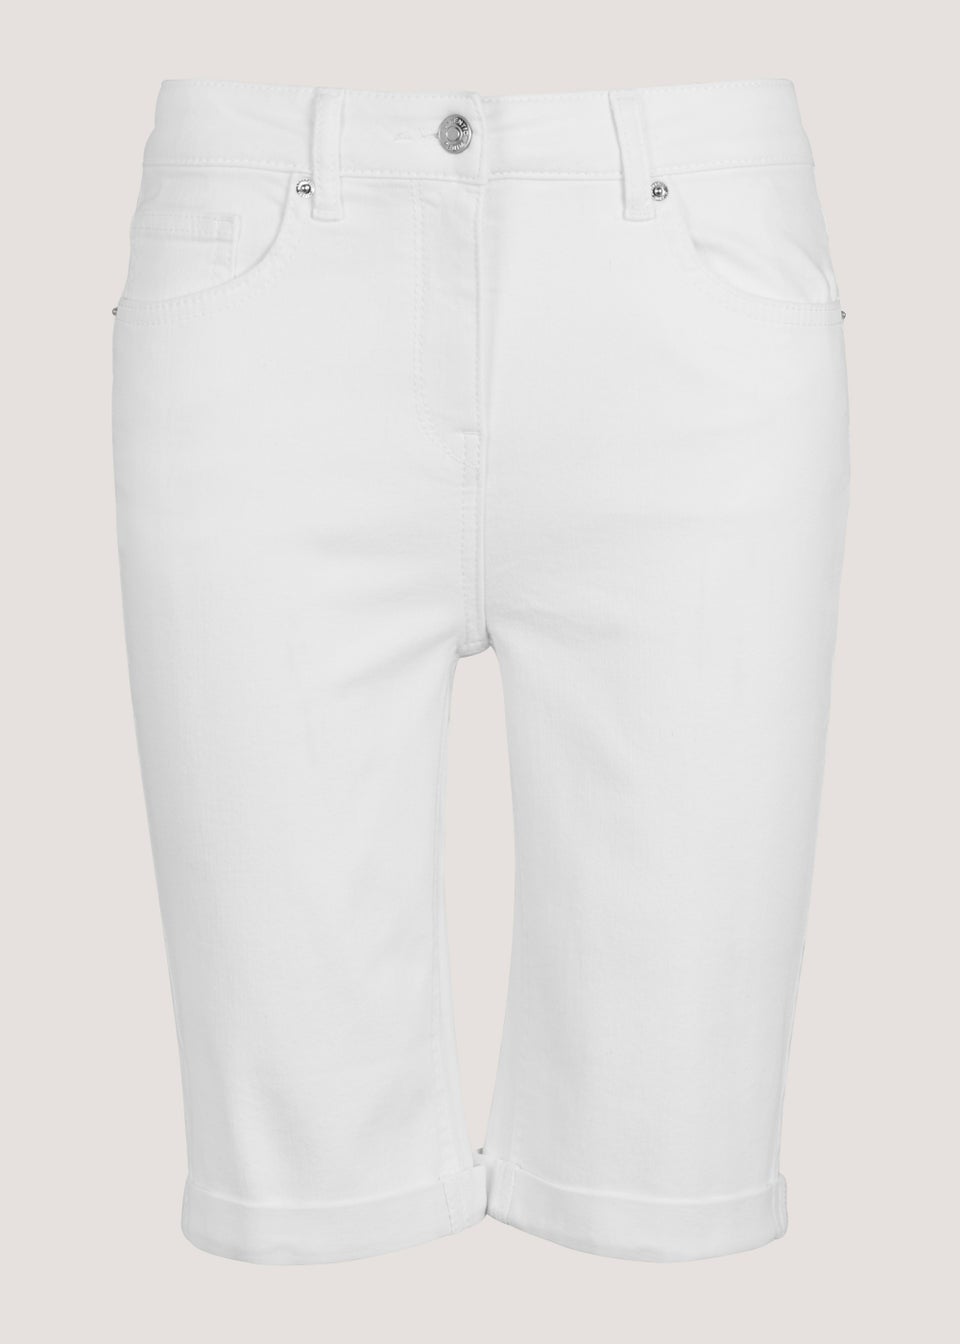 April White Denim Knee Length Shorts - Matalan